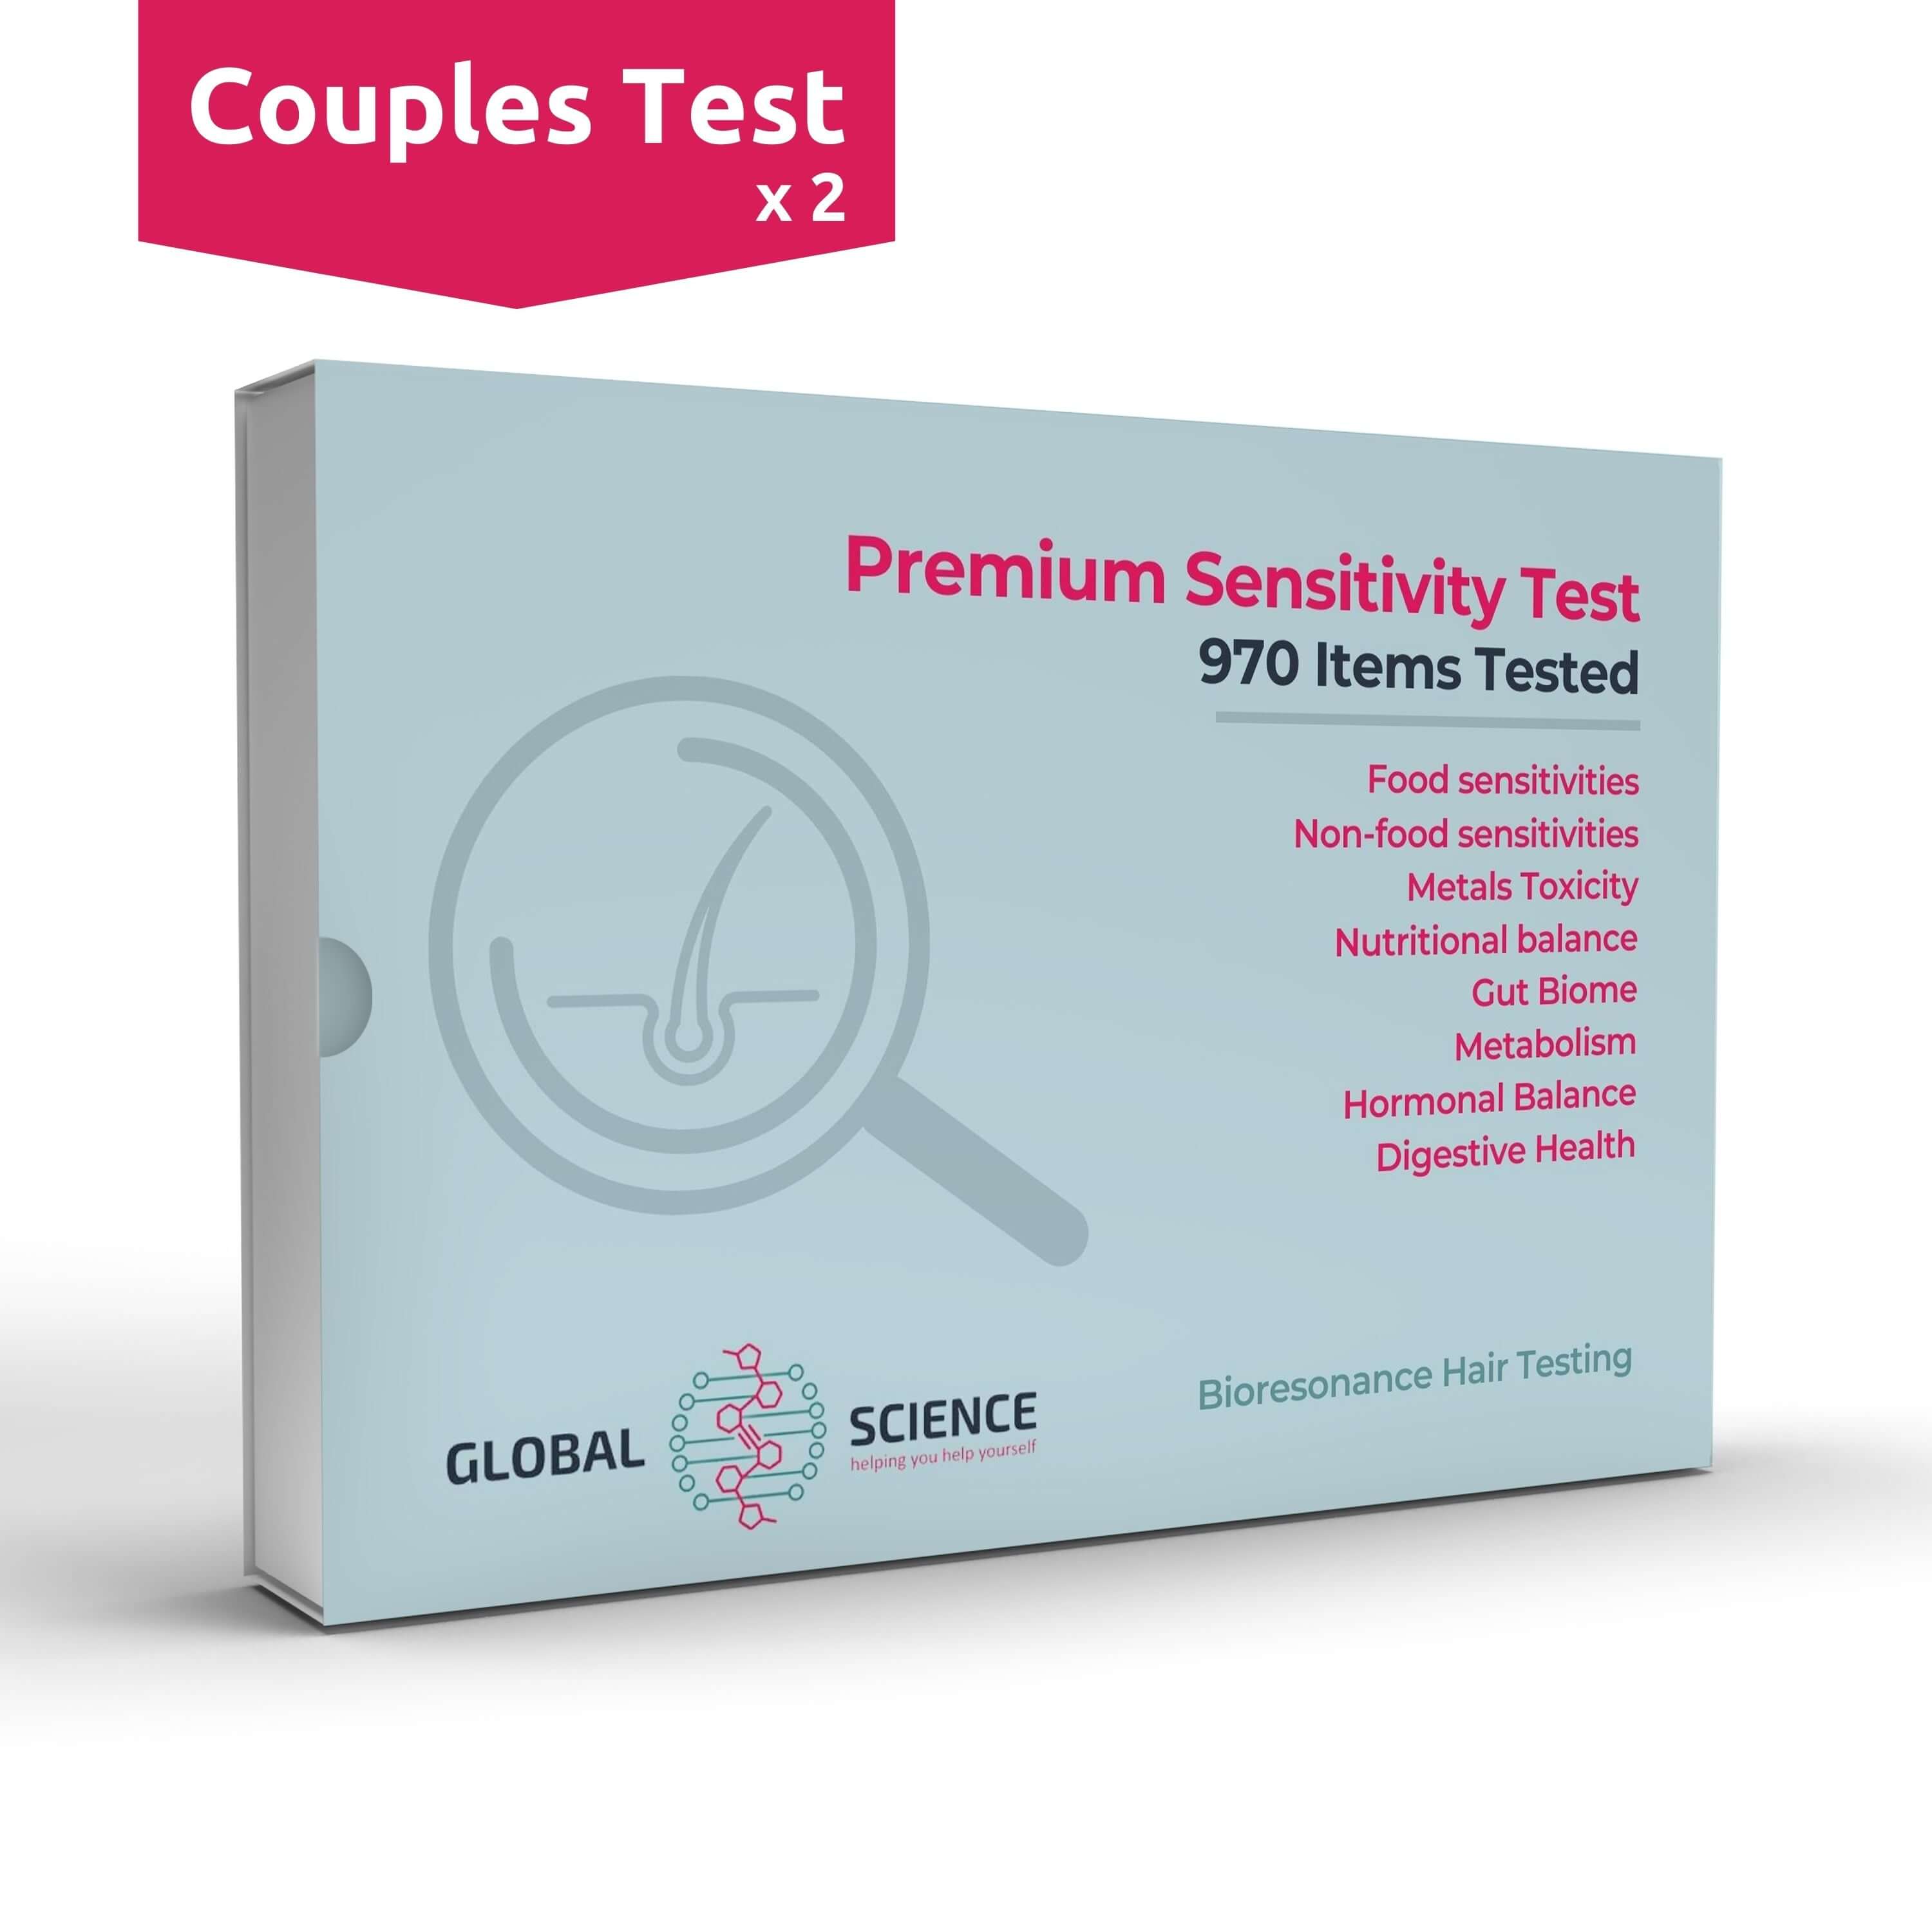 Premium Sensitivity 970 Mock Up Kit Couples - Elimination diet following an allergy or intolerance test